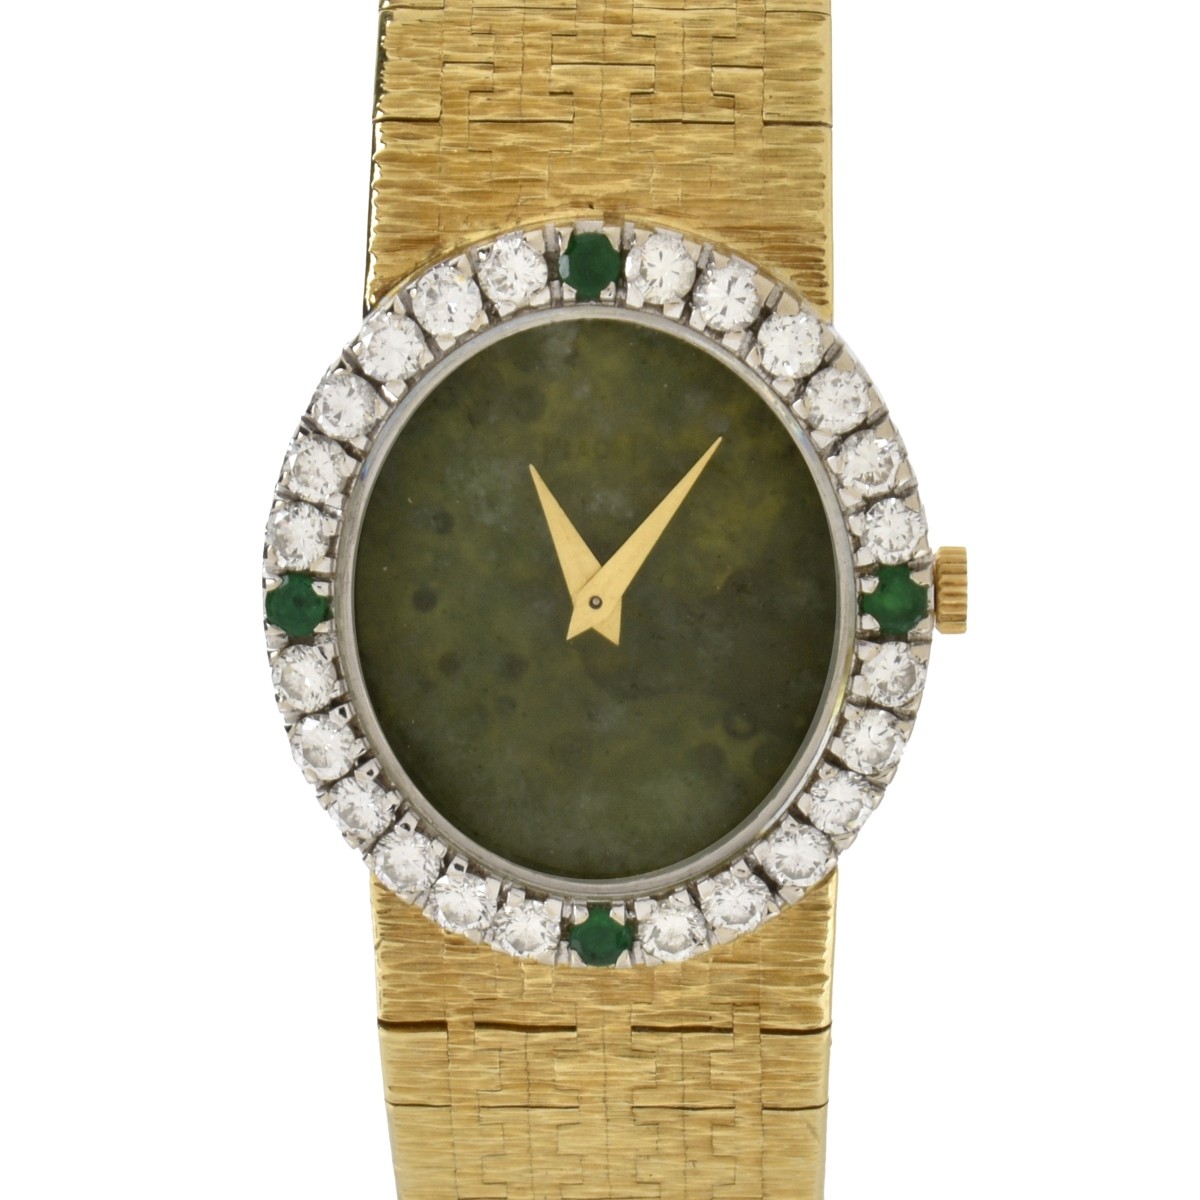 Piaget Diamond and 18K Watch